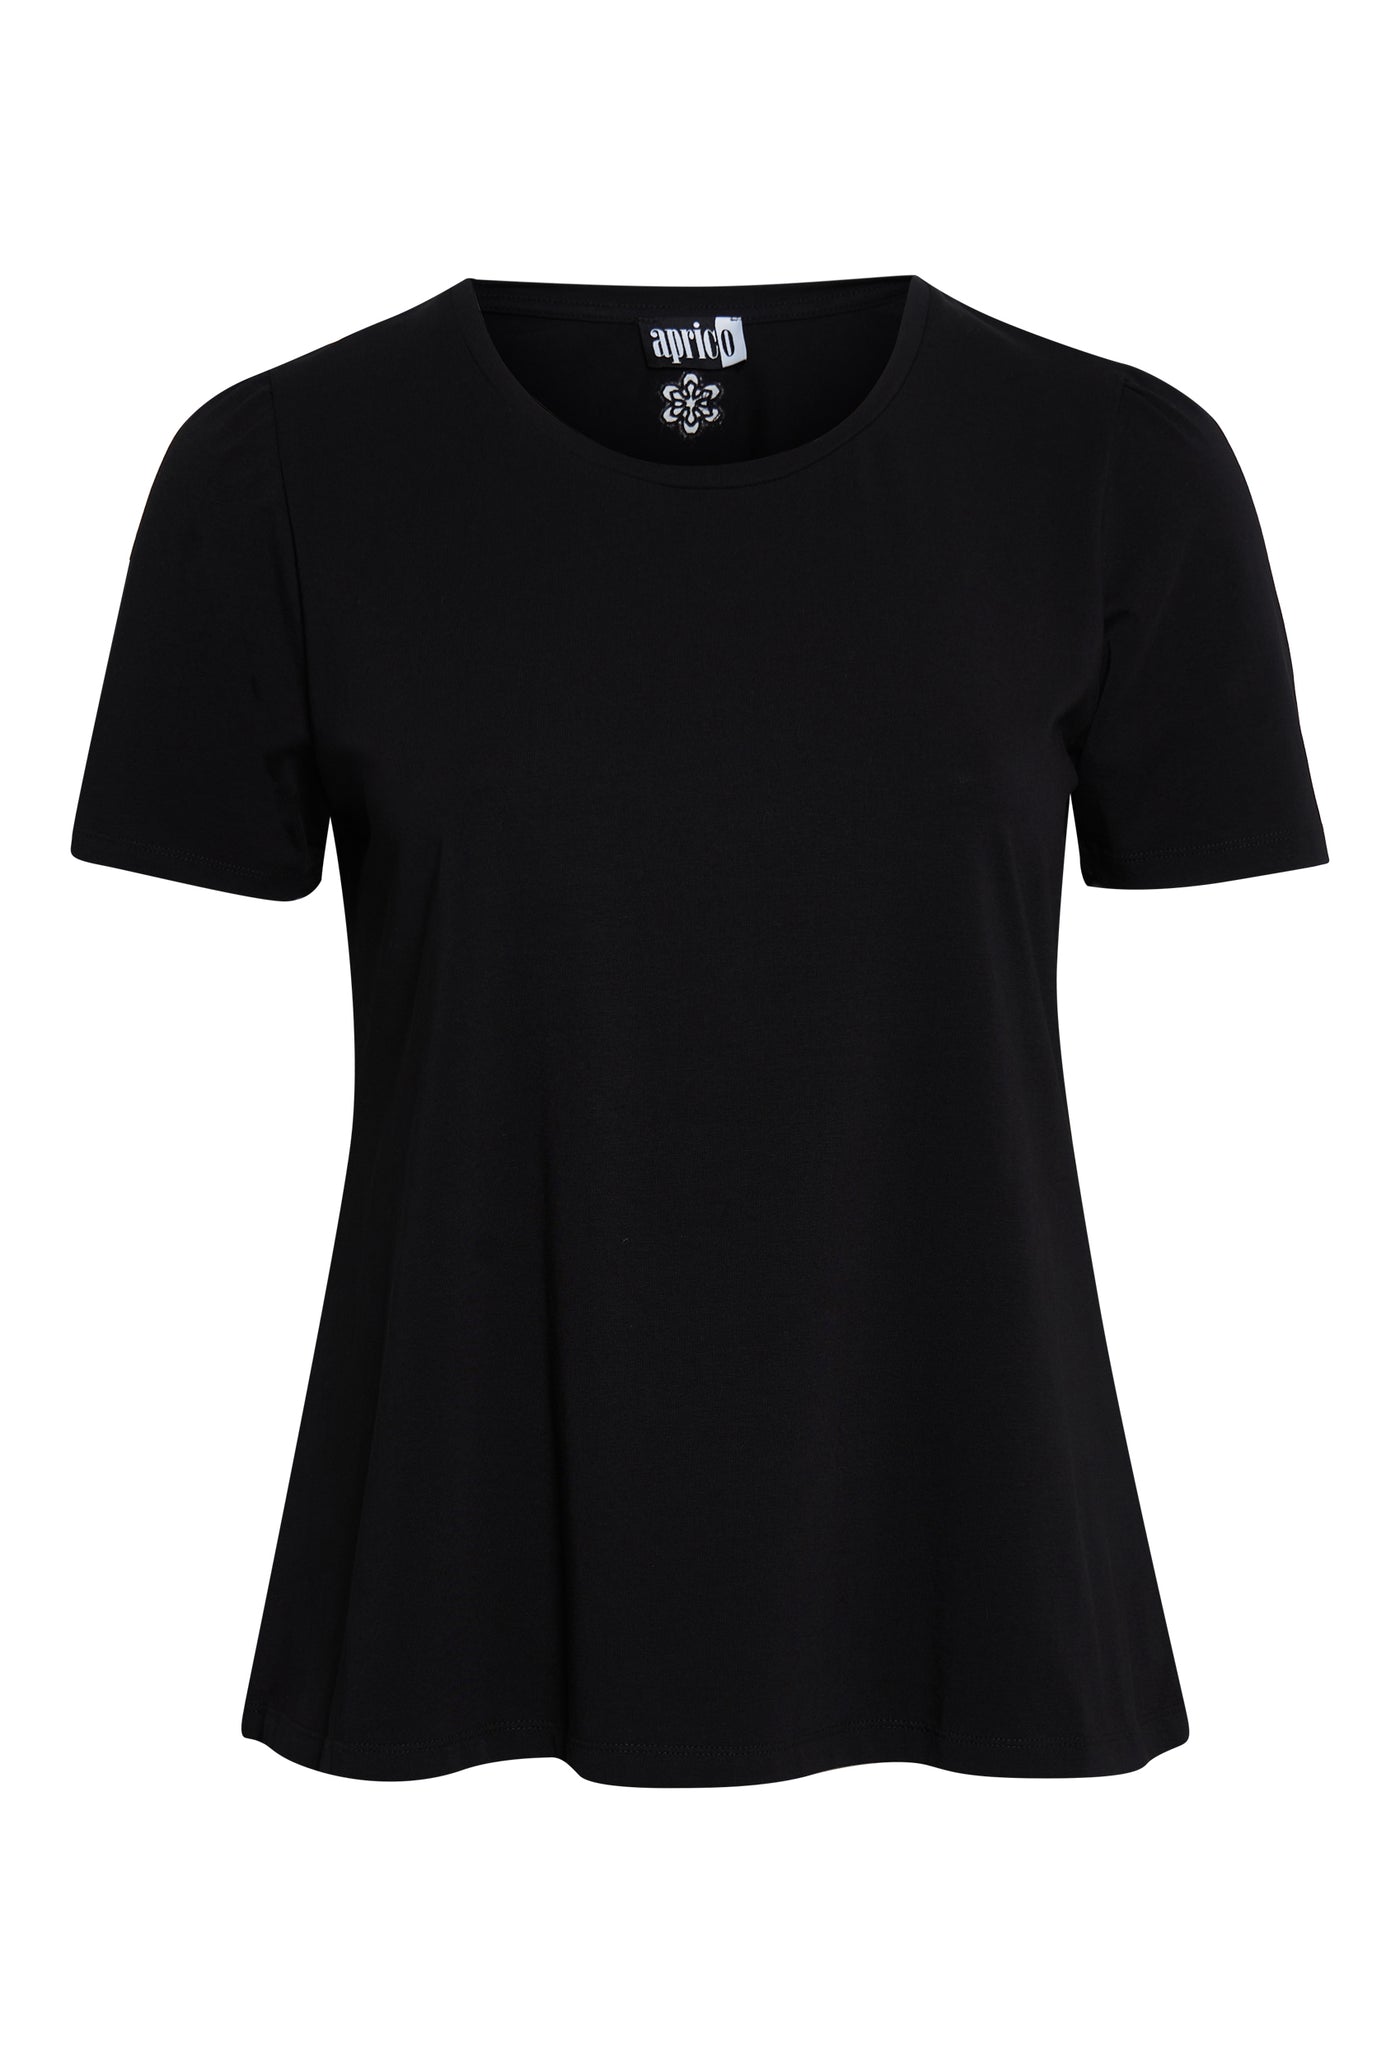 Aprico APFontana T-Shirt 010 Black